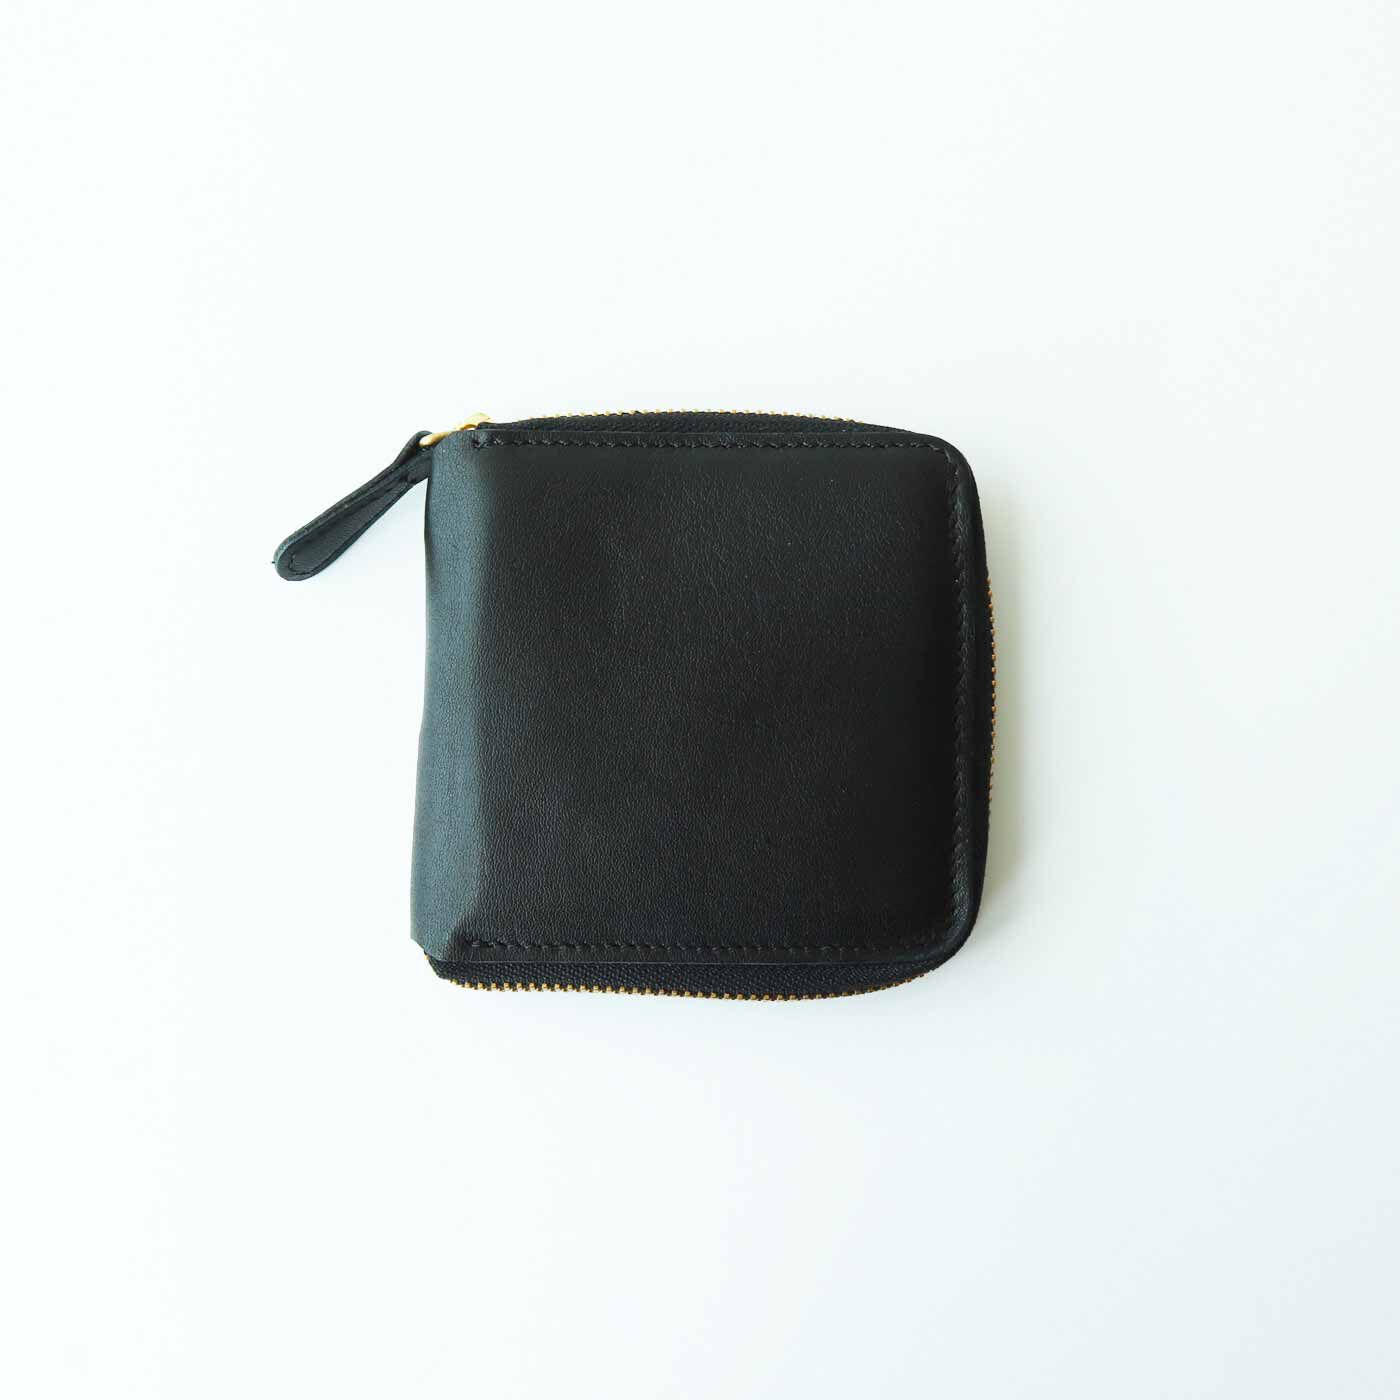 ＆Stories|福岡の鞄作家と作った 職人本革のラウンドジップ折り財布〈ブラック〉|裏面です。